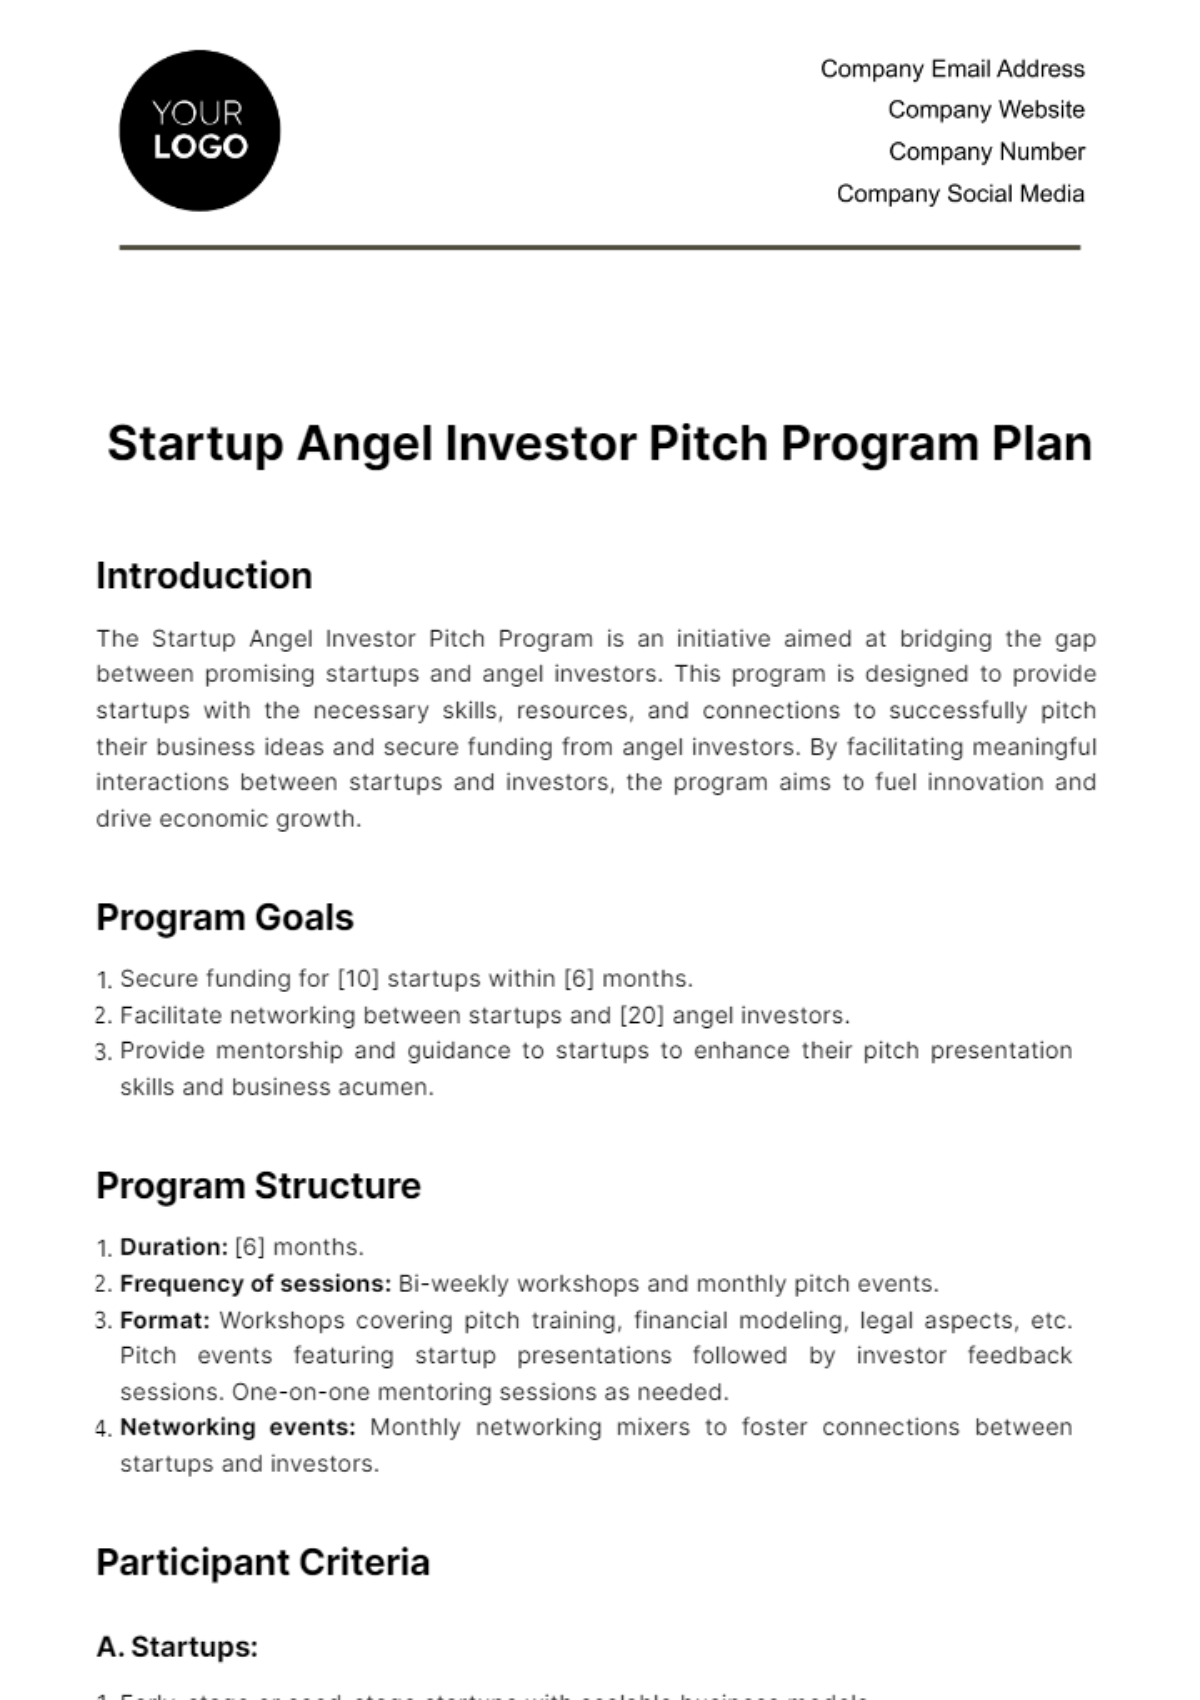 Free Startup Angel Investor Pitch Program Plan Template